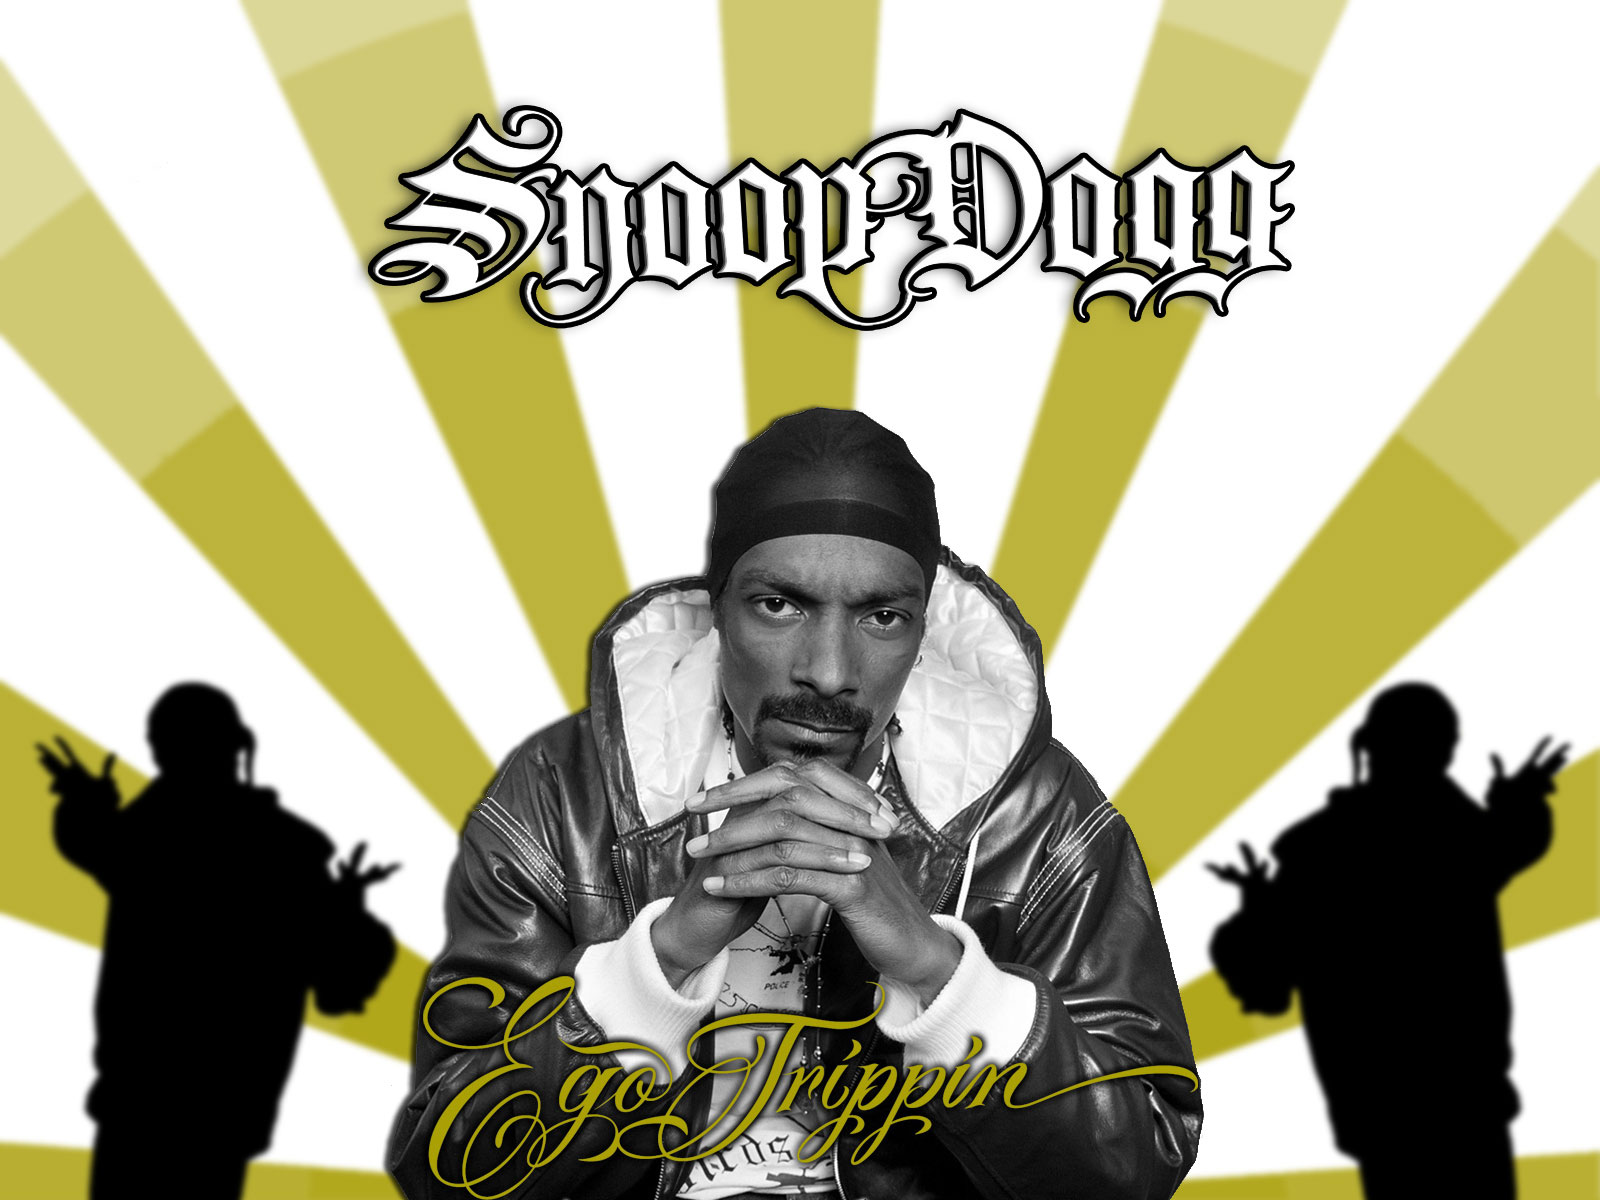 Snoop dogg hd wallpapers